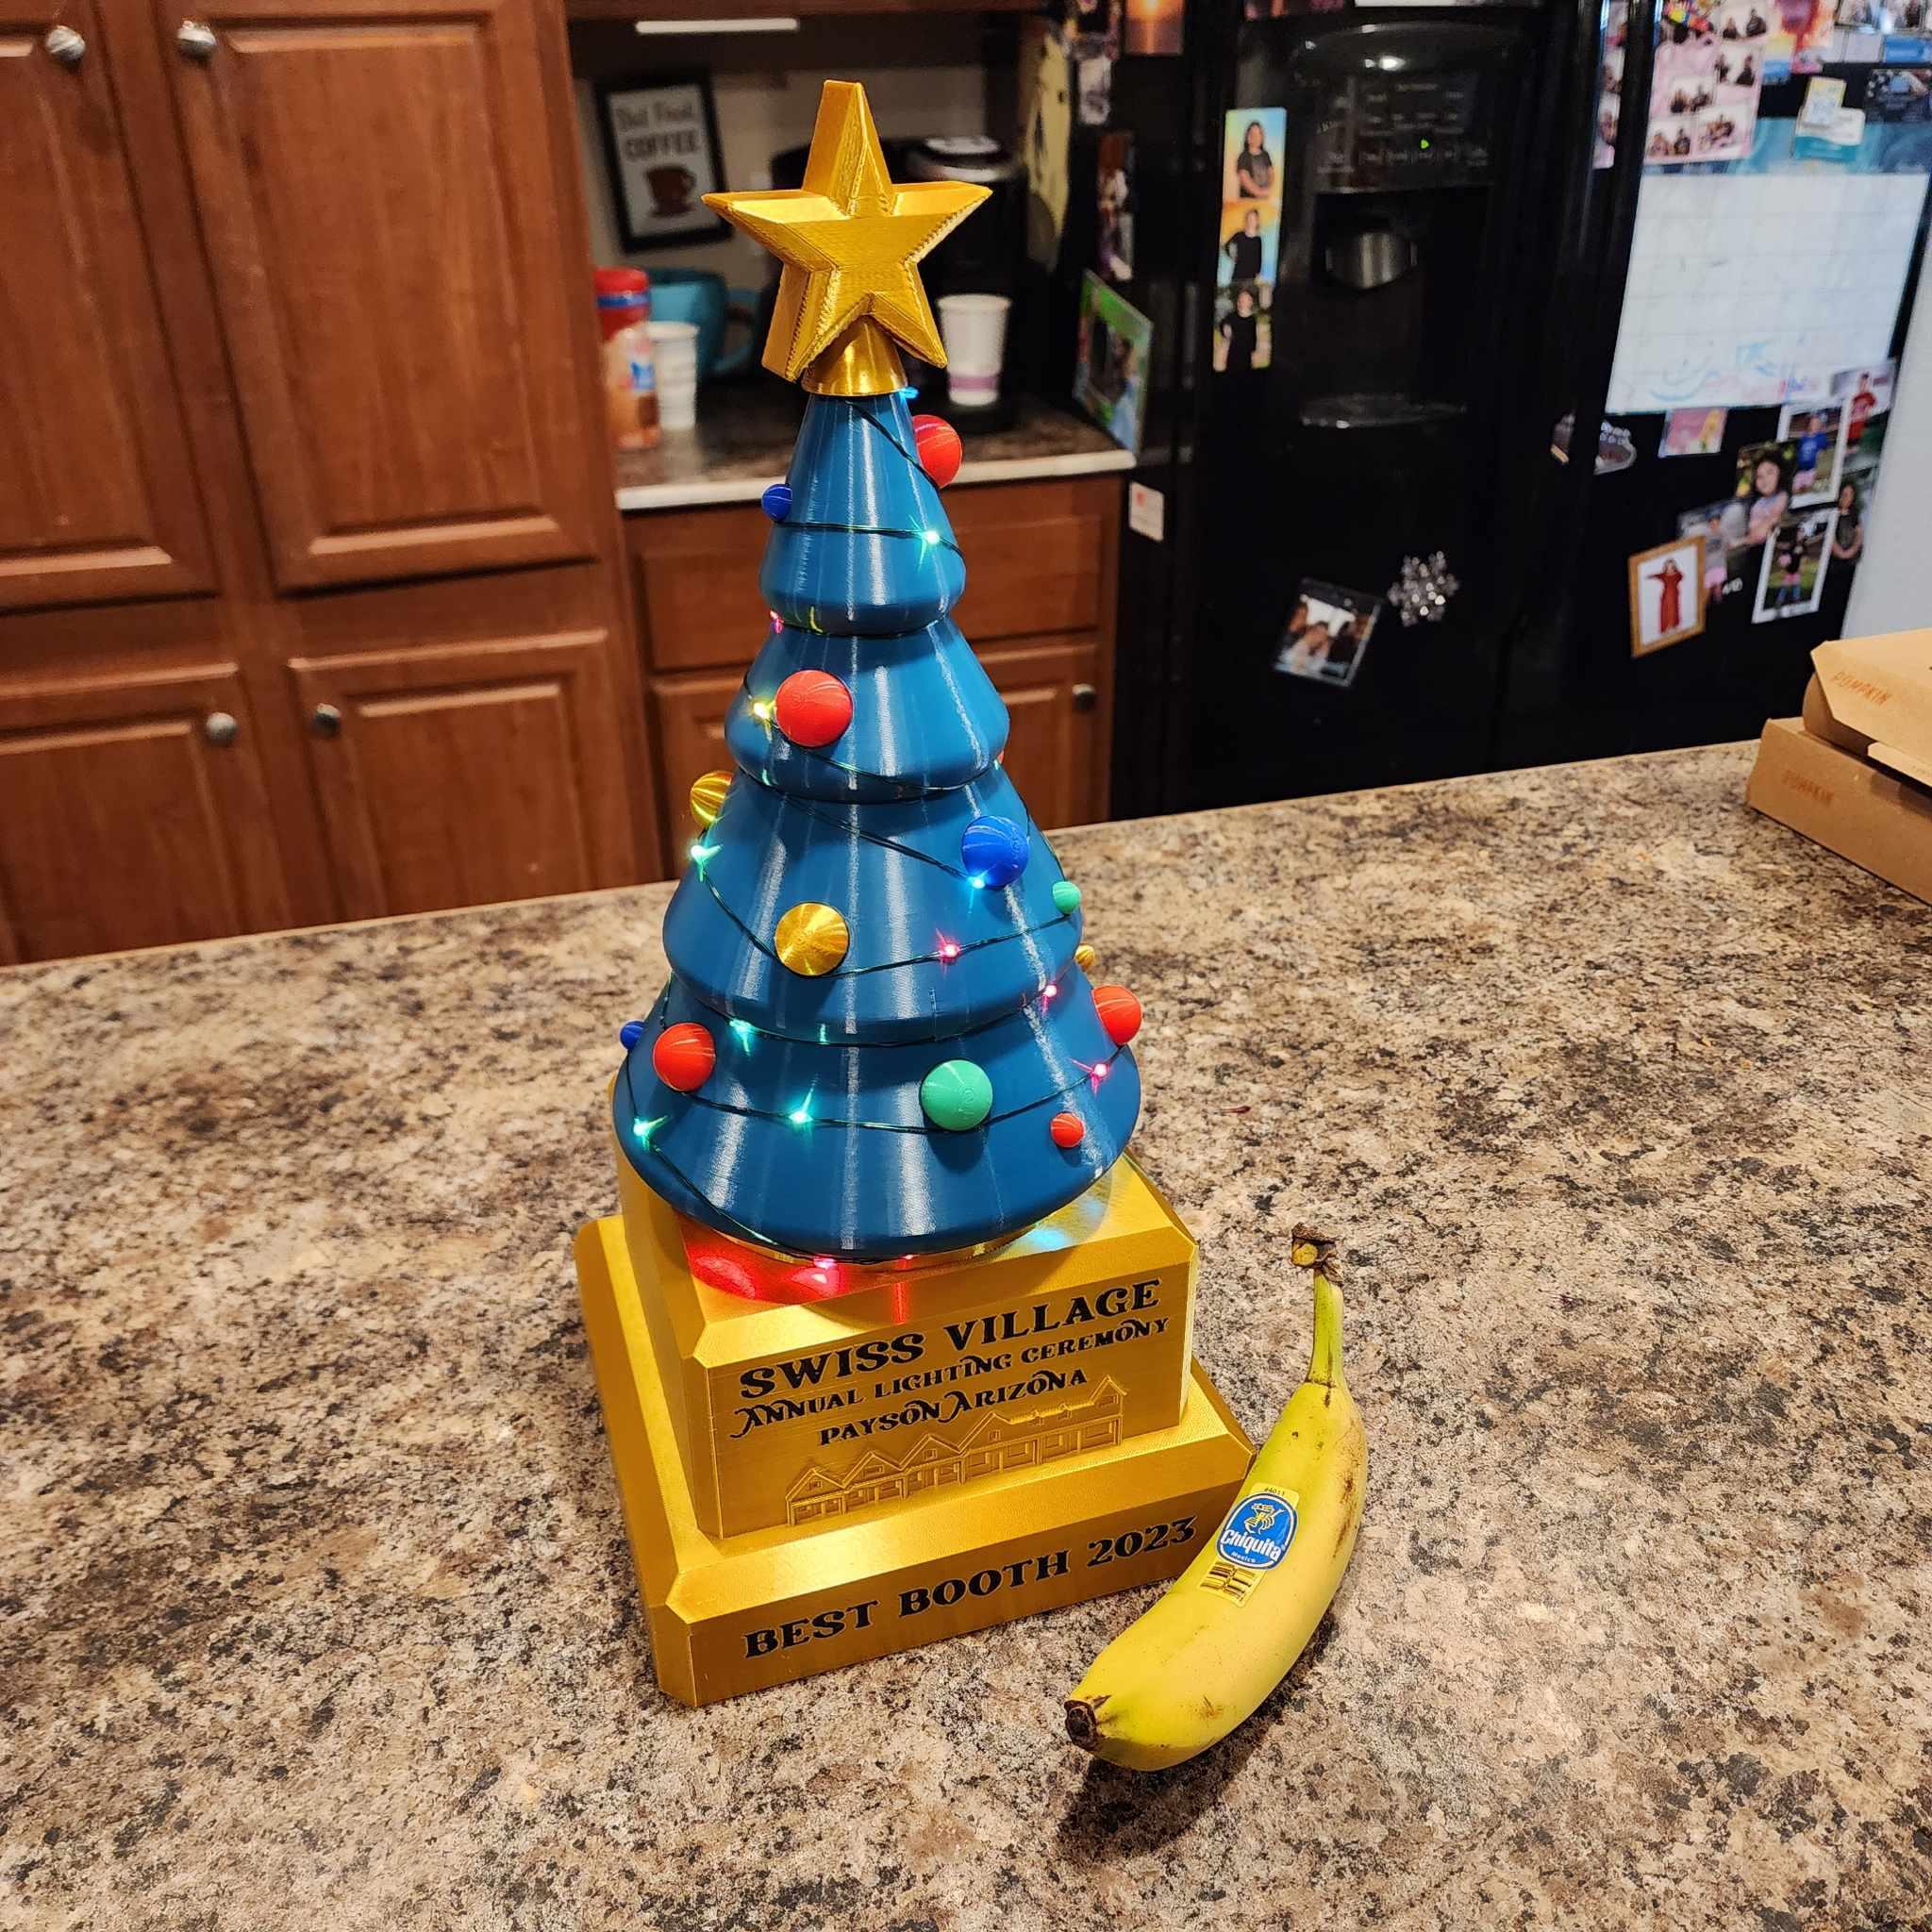 Christmas tree Trophy 3d model